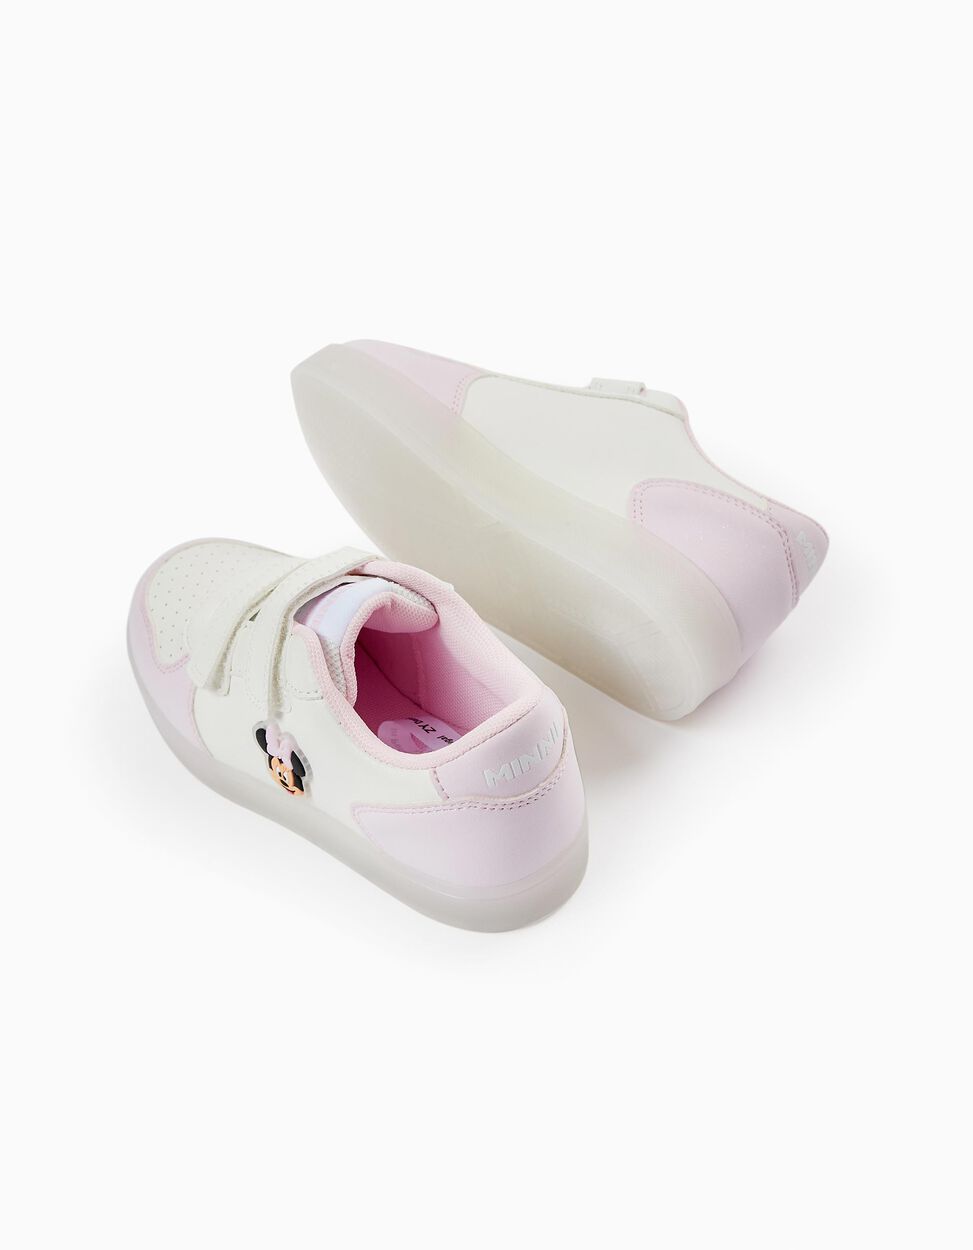 Comprar Online Zapatillas con Luces para Niña 'Minnie', Blanco/Rosa